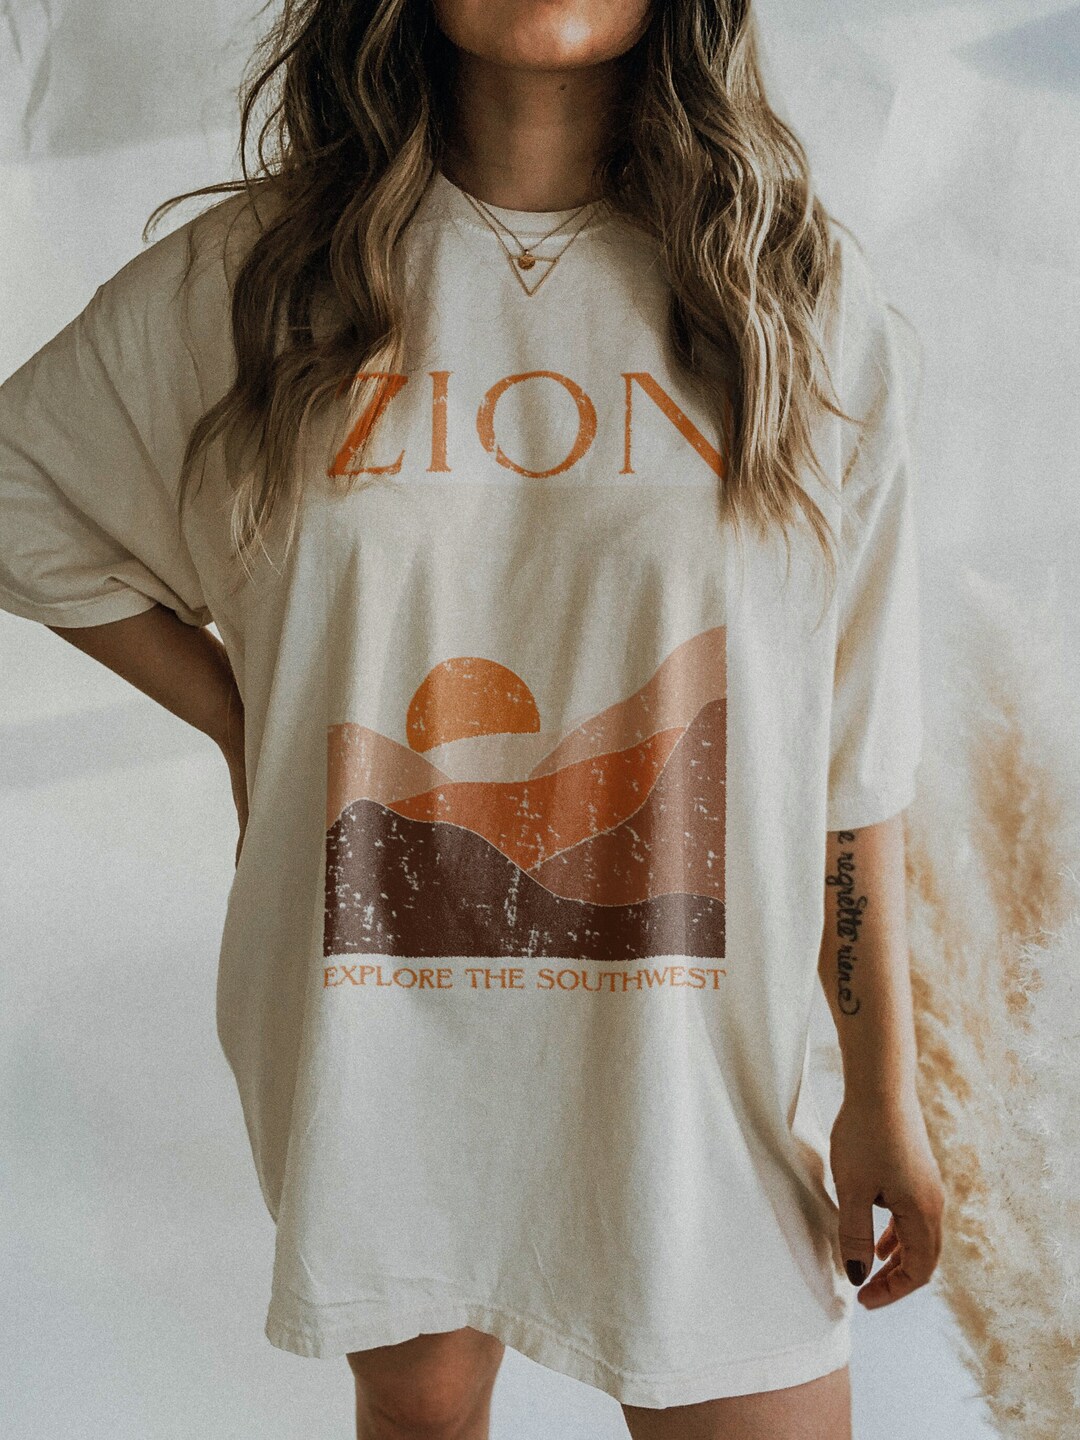 Zion National Park Shirt Zion Sweatshirt Retro National Park - Etsy